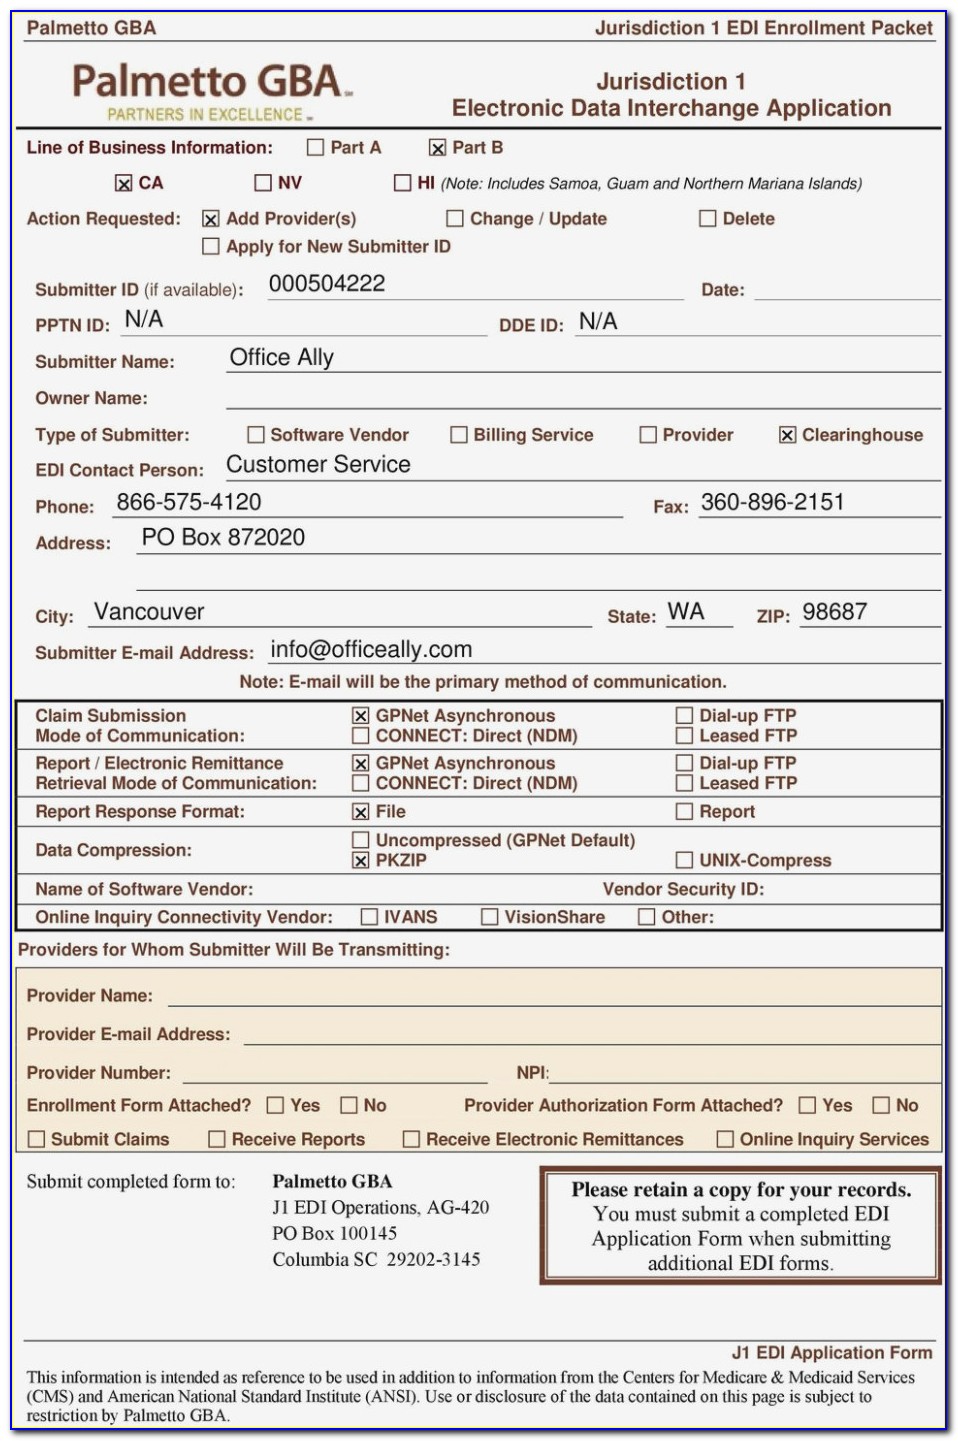 Printable Medicare Form 1490s